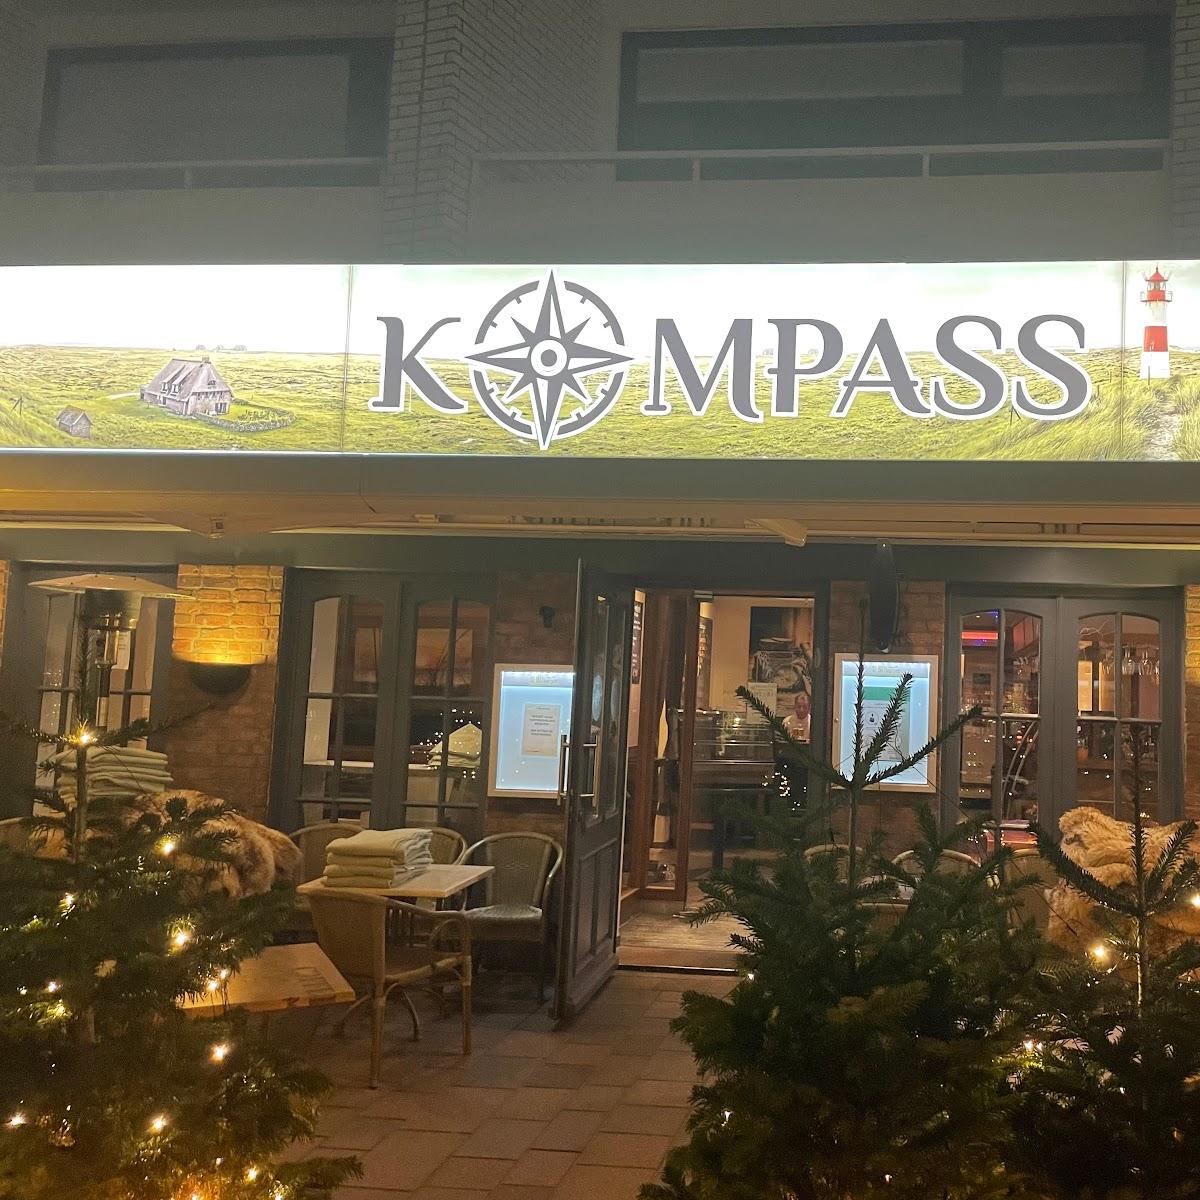 Restaurant "Kompass" in Sylt